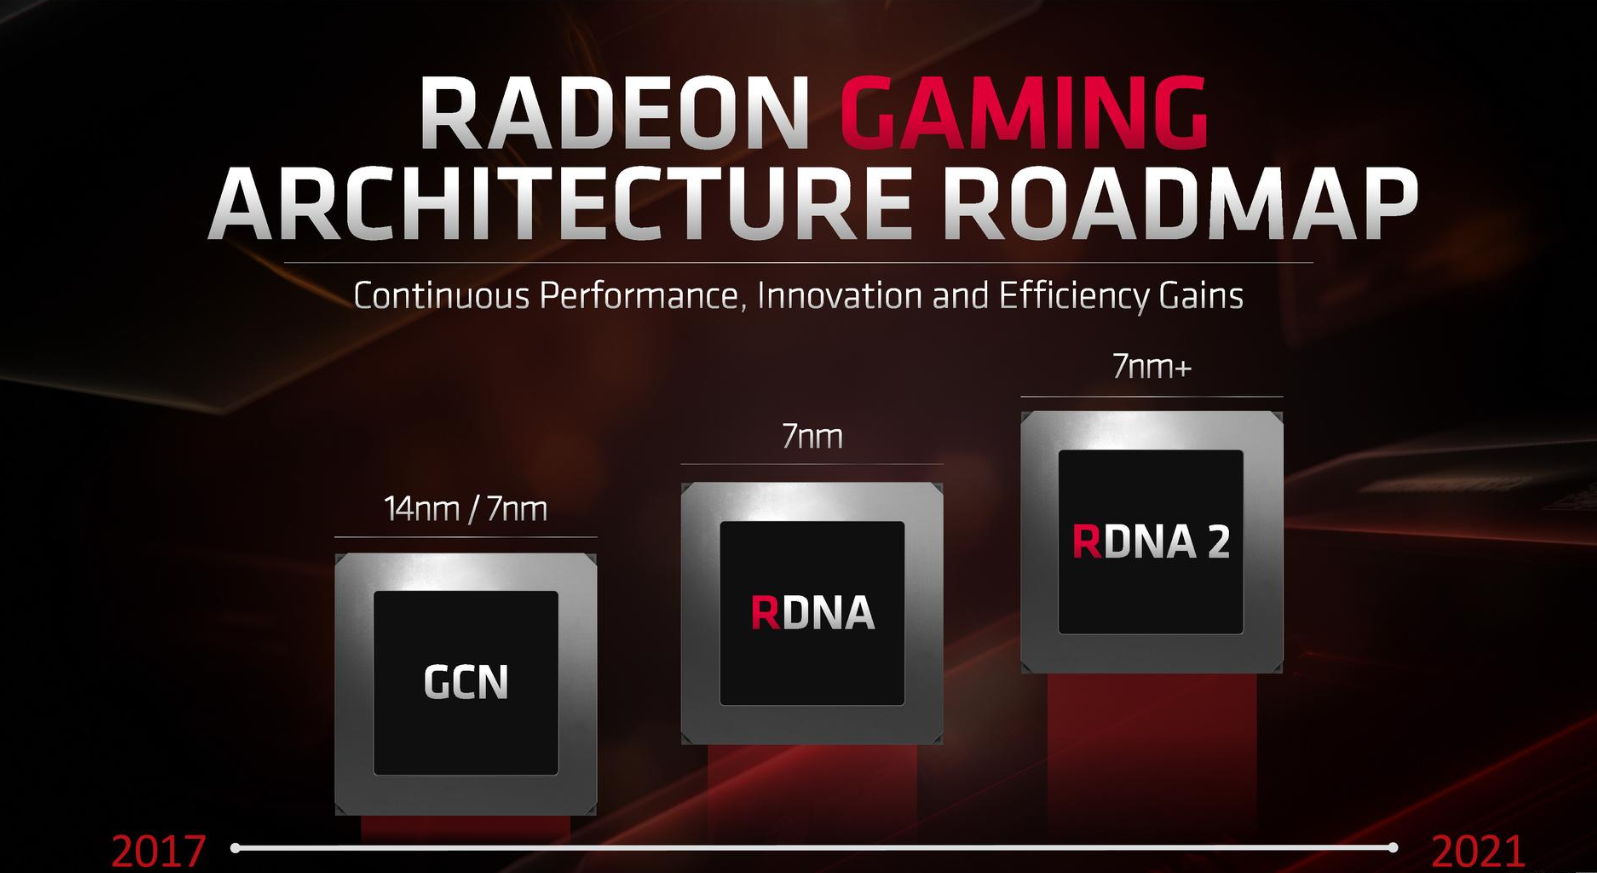 AMD Radeon 